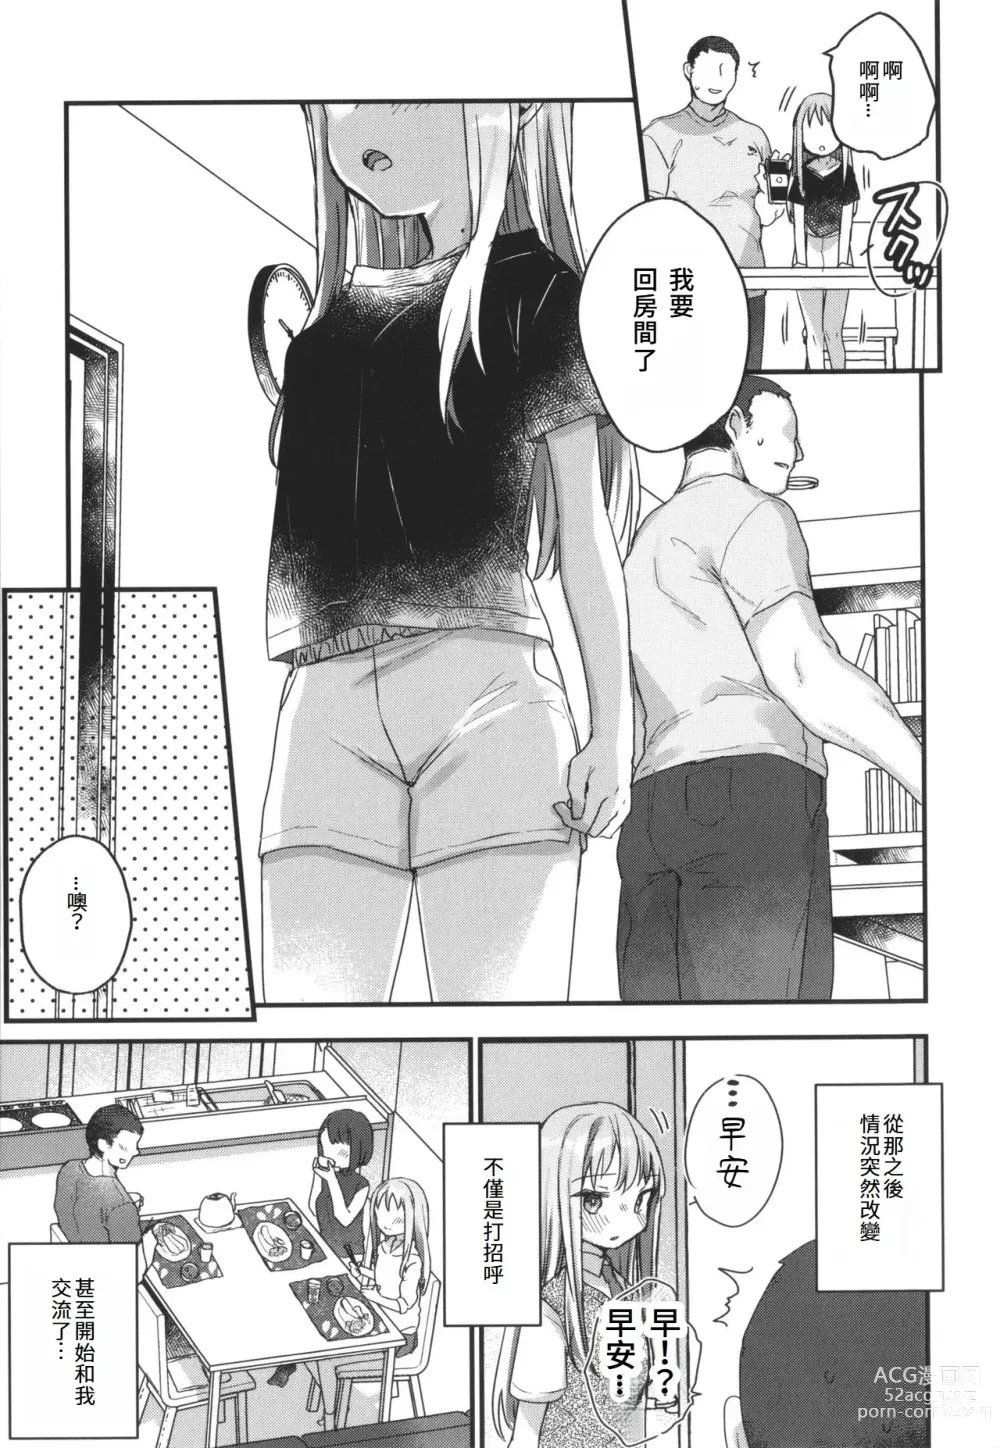 Page 5 of manga 催眠治療太有效了